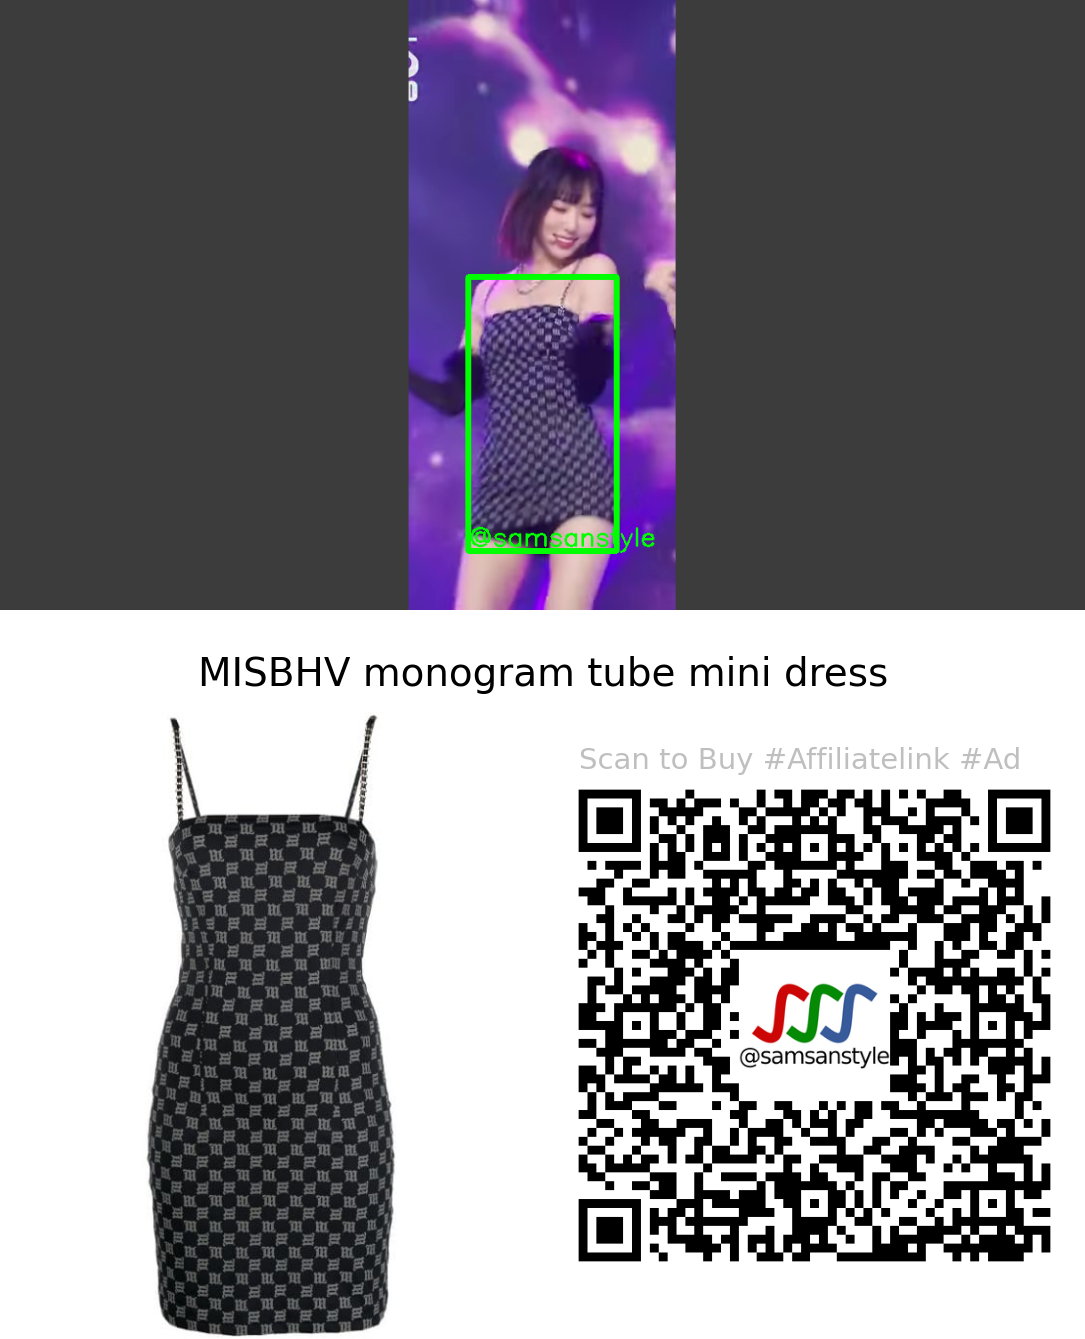 IRRIS Liv | Stay w!th me SBS Inkigayo | MISBHV monogram tube mini dress